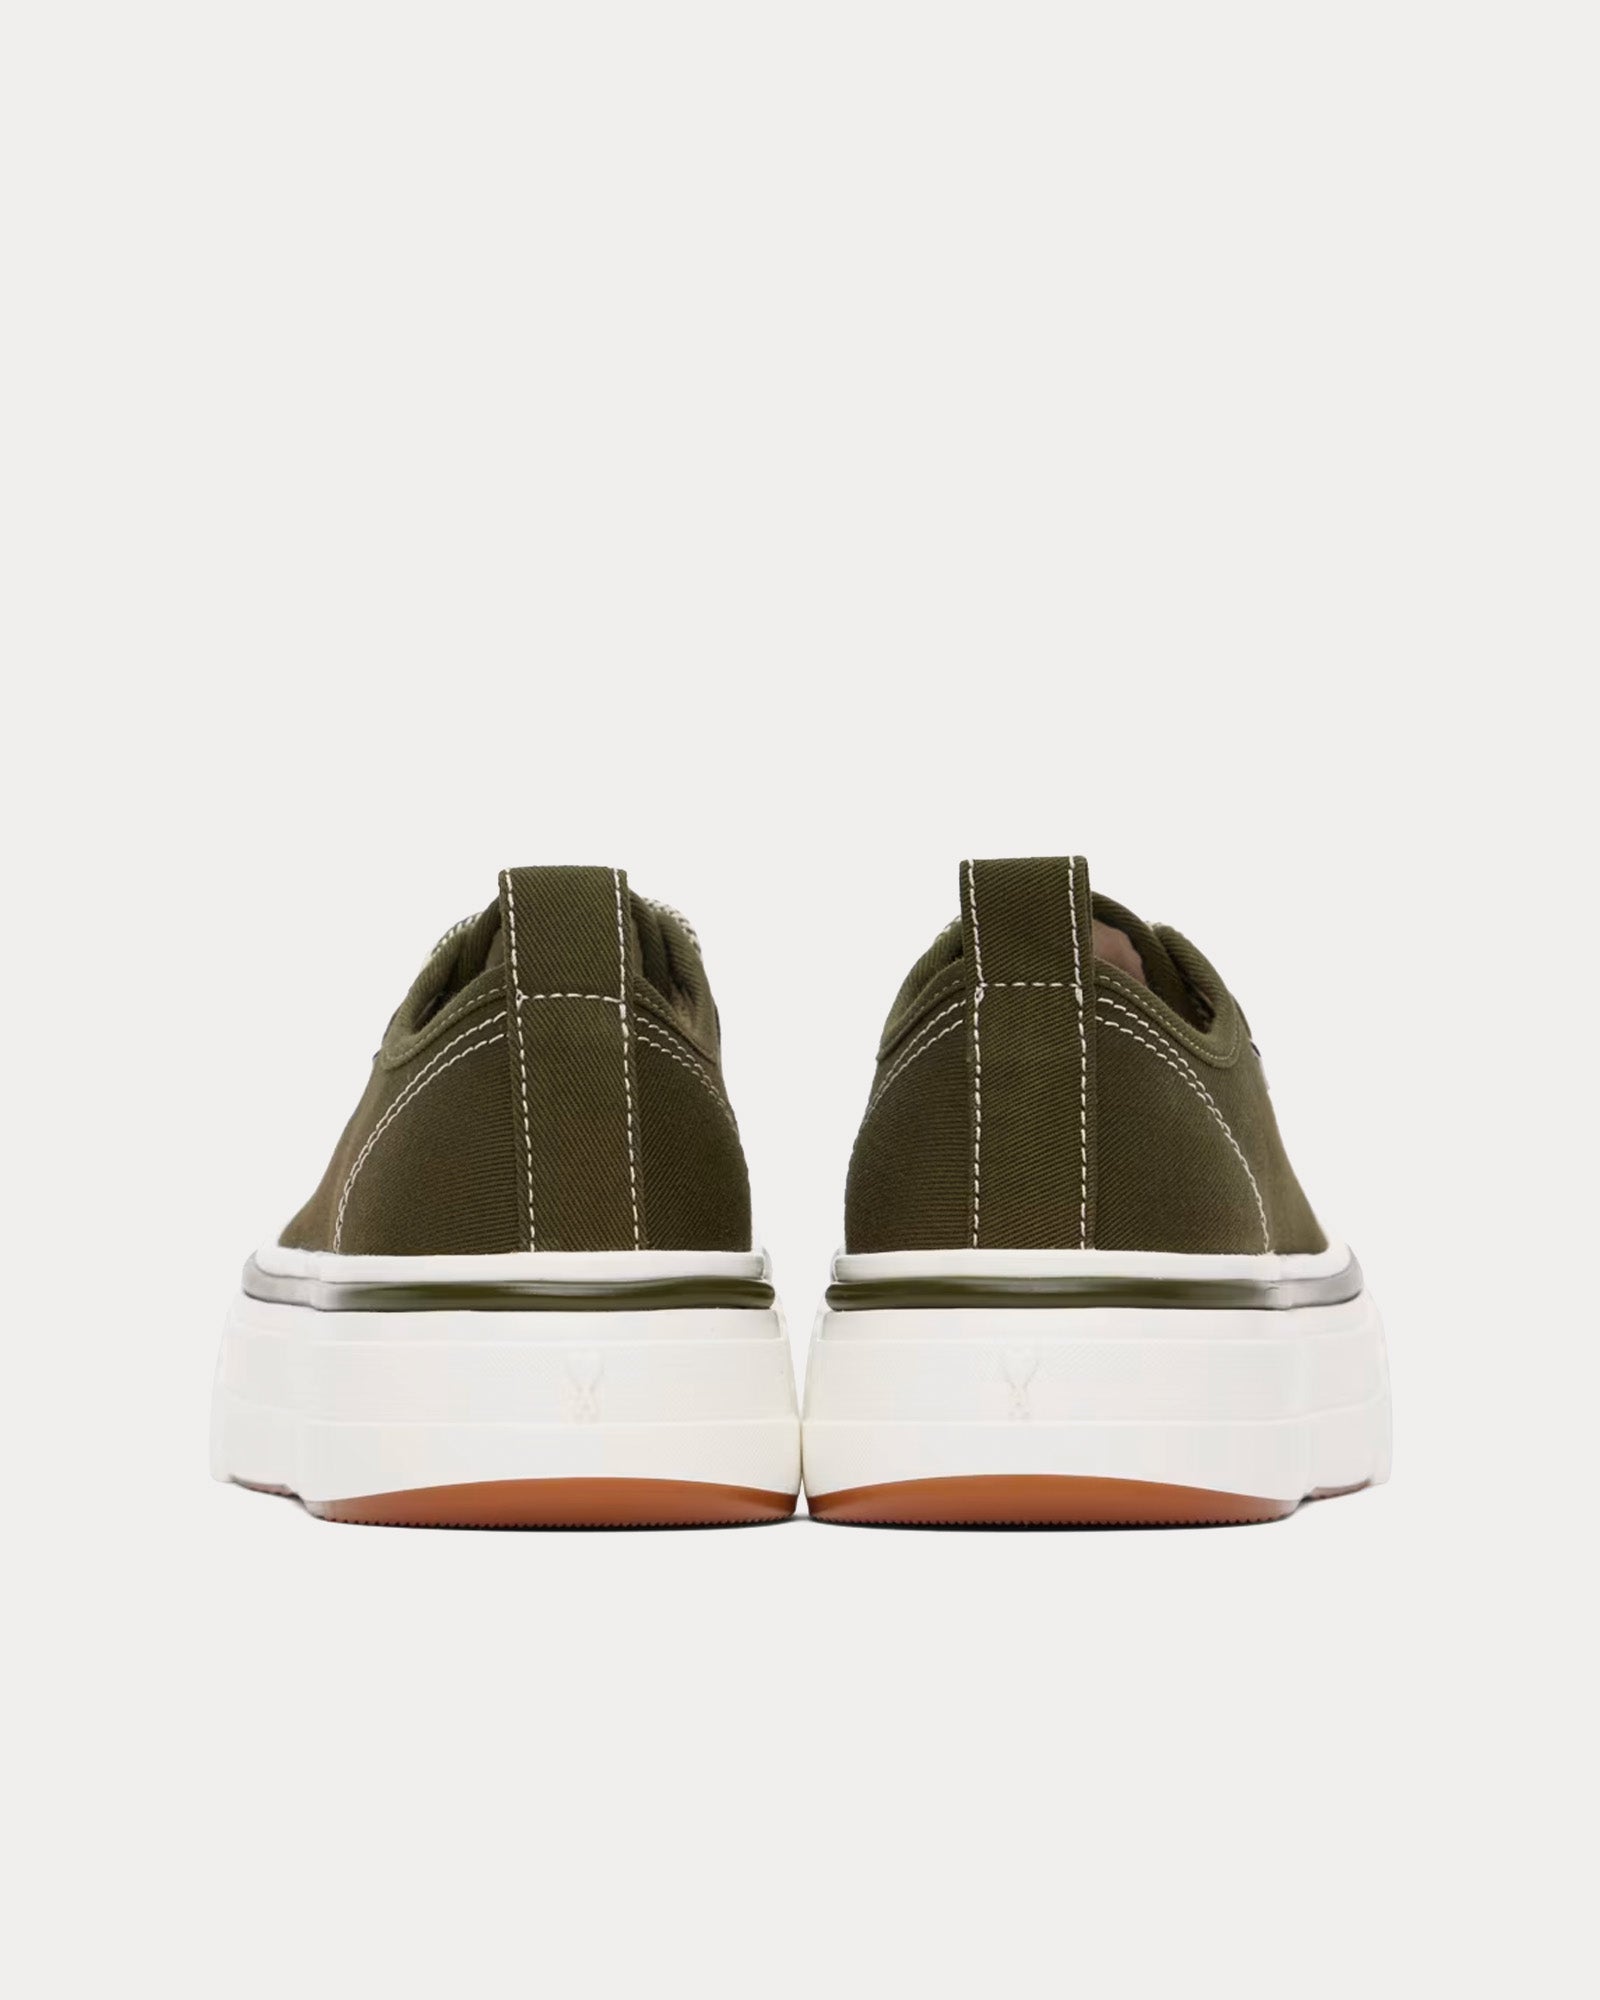 AMI - 1980 Canvas Olive Foncé / White Low Top Sneakers